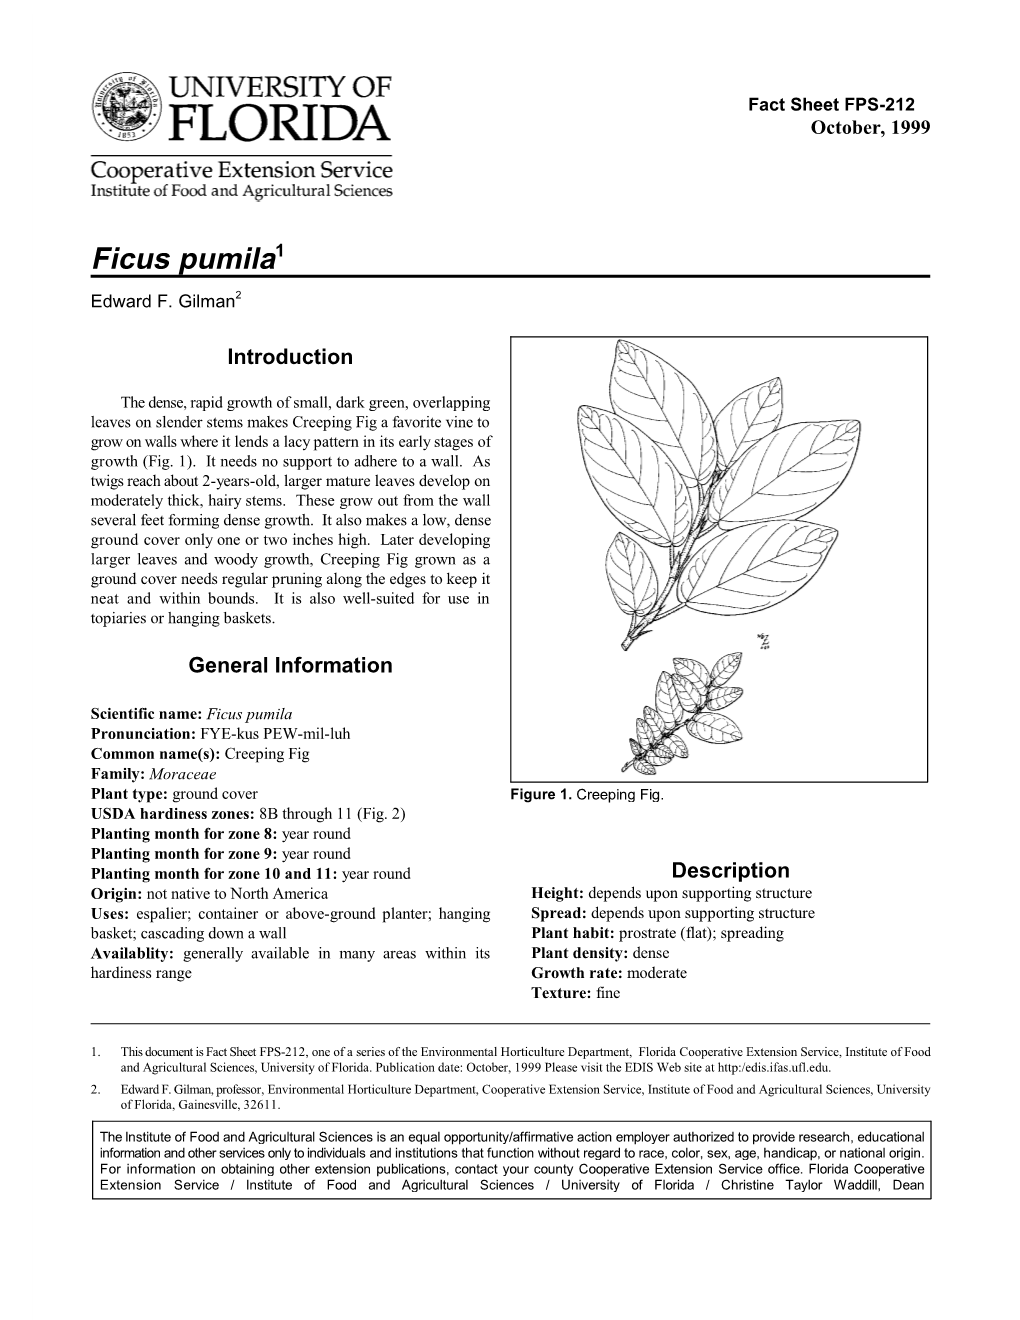 Ficus Pumila -- Creeping Fig Page 2